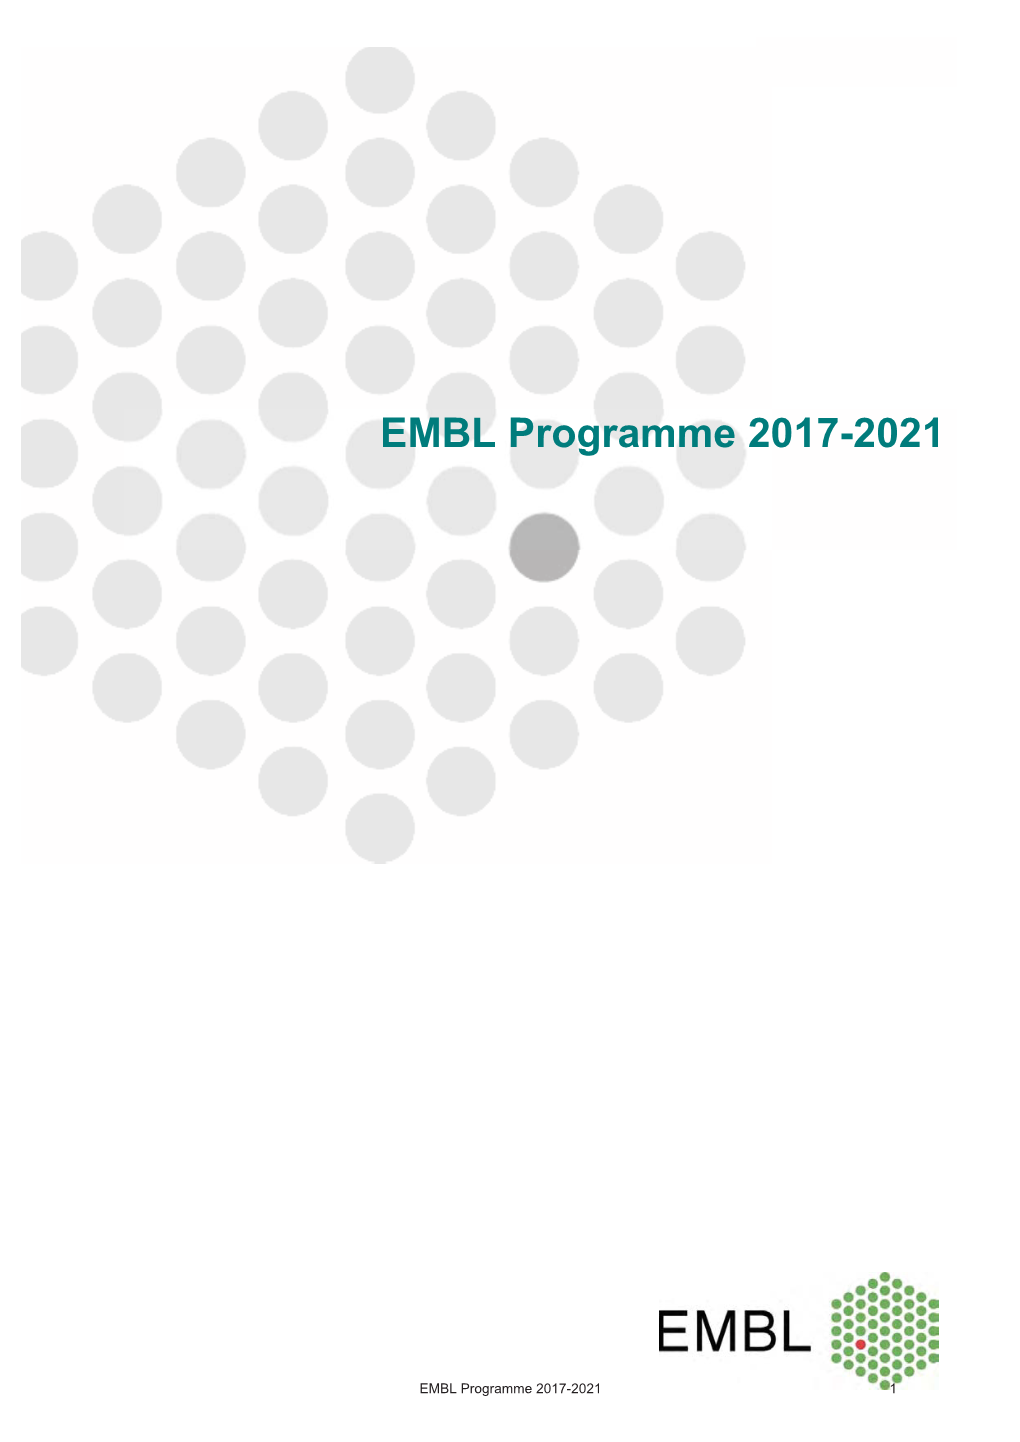 EMBL Programme 2017-2021: Digital Biology